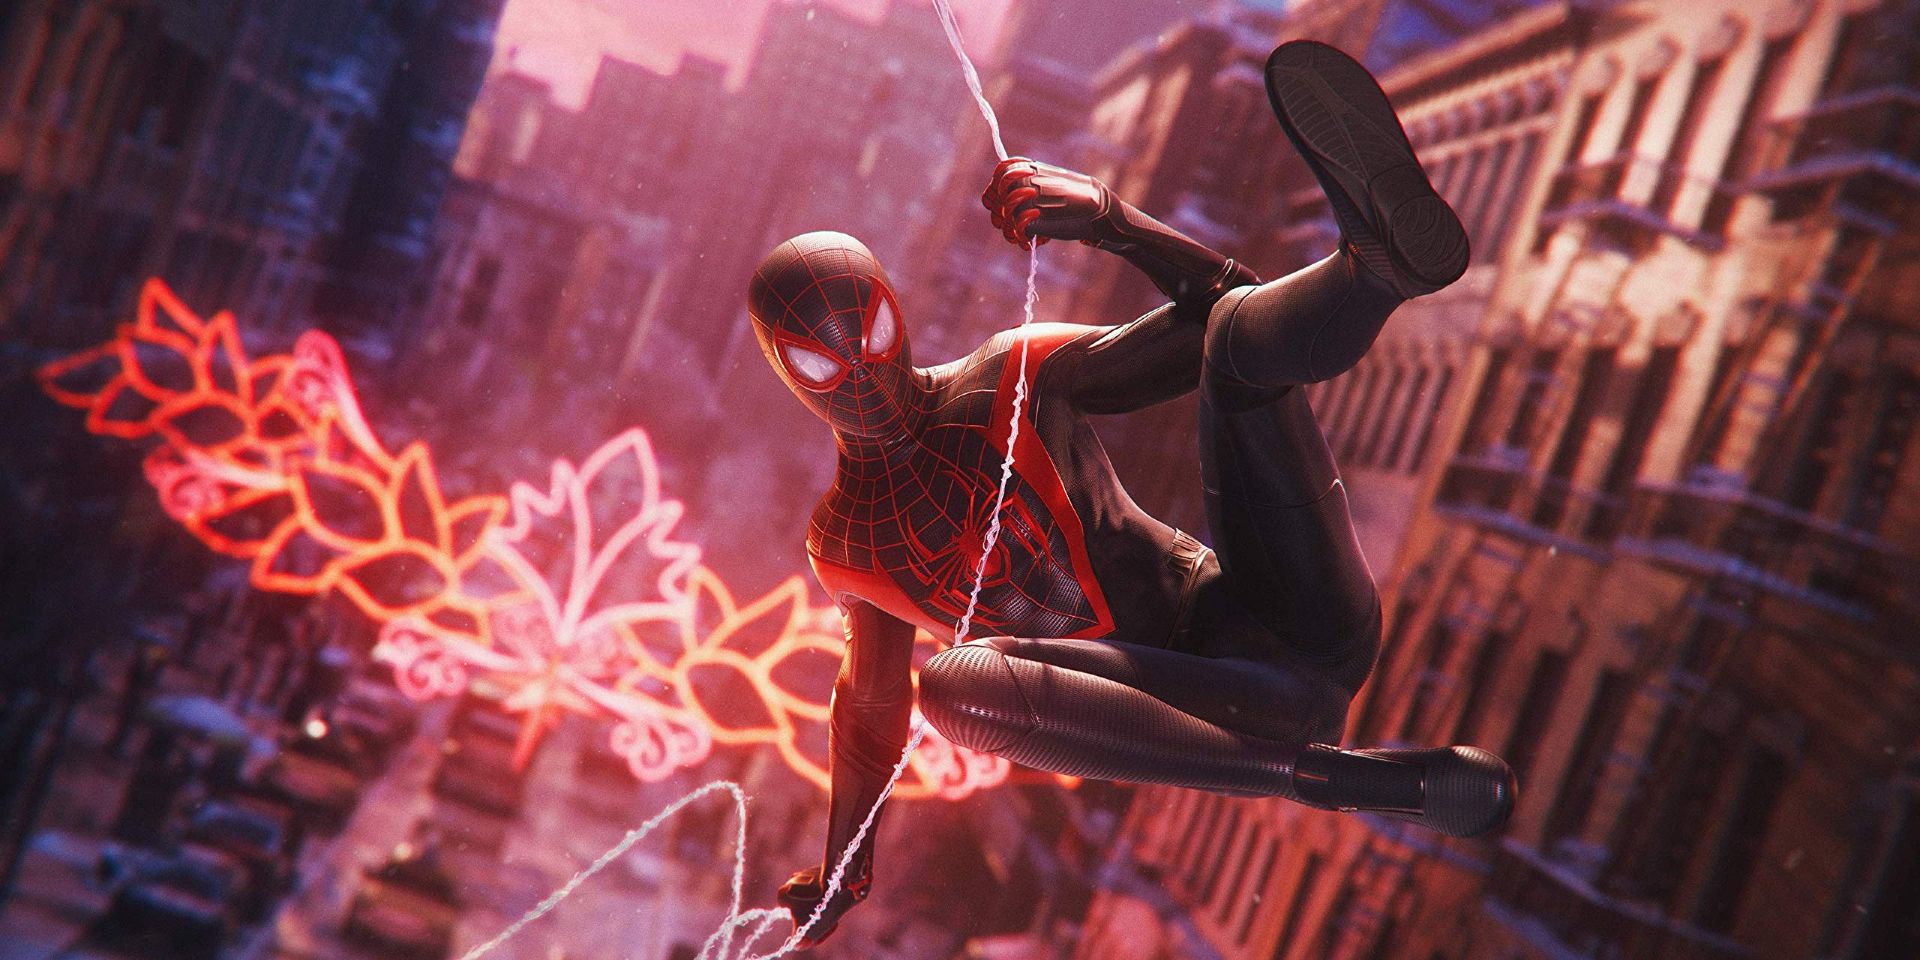 Spider-Man (Miles Morales) swings through New York in Marvel's Spider-Man: Miles Morales